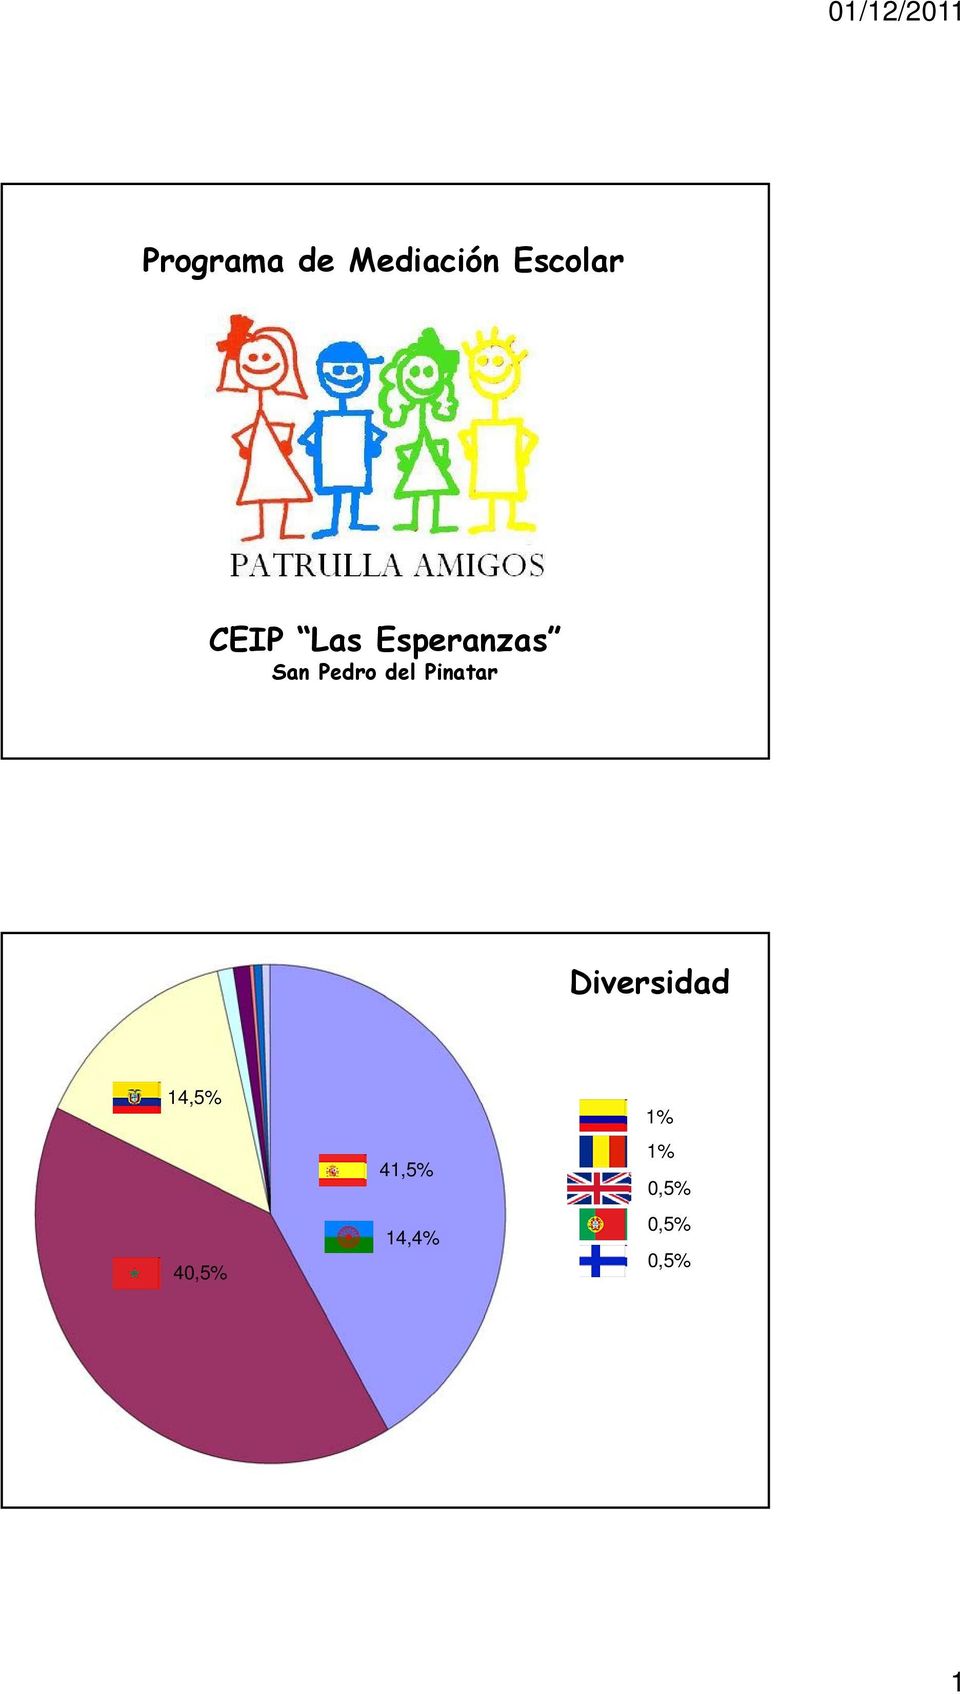 Pedro del Pinatar Diversidad 14,5%